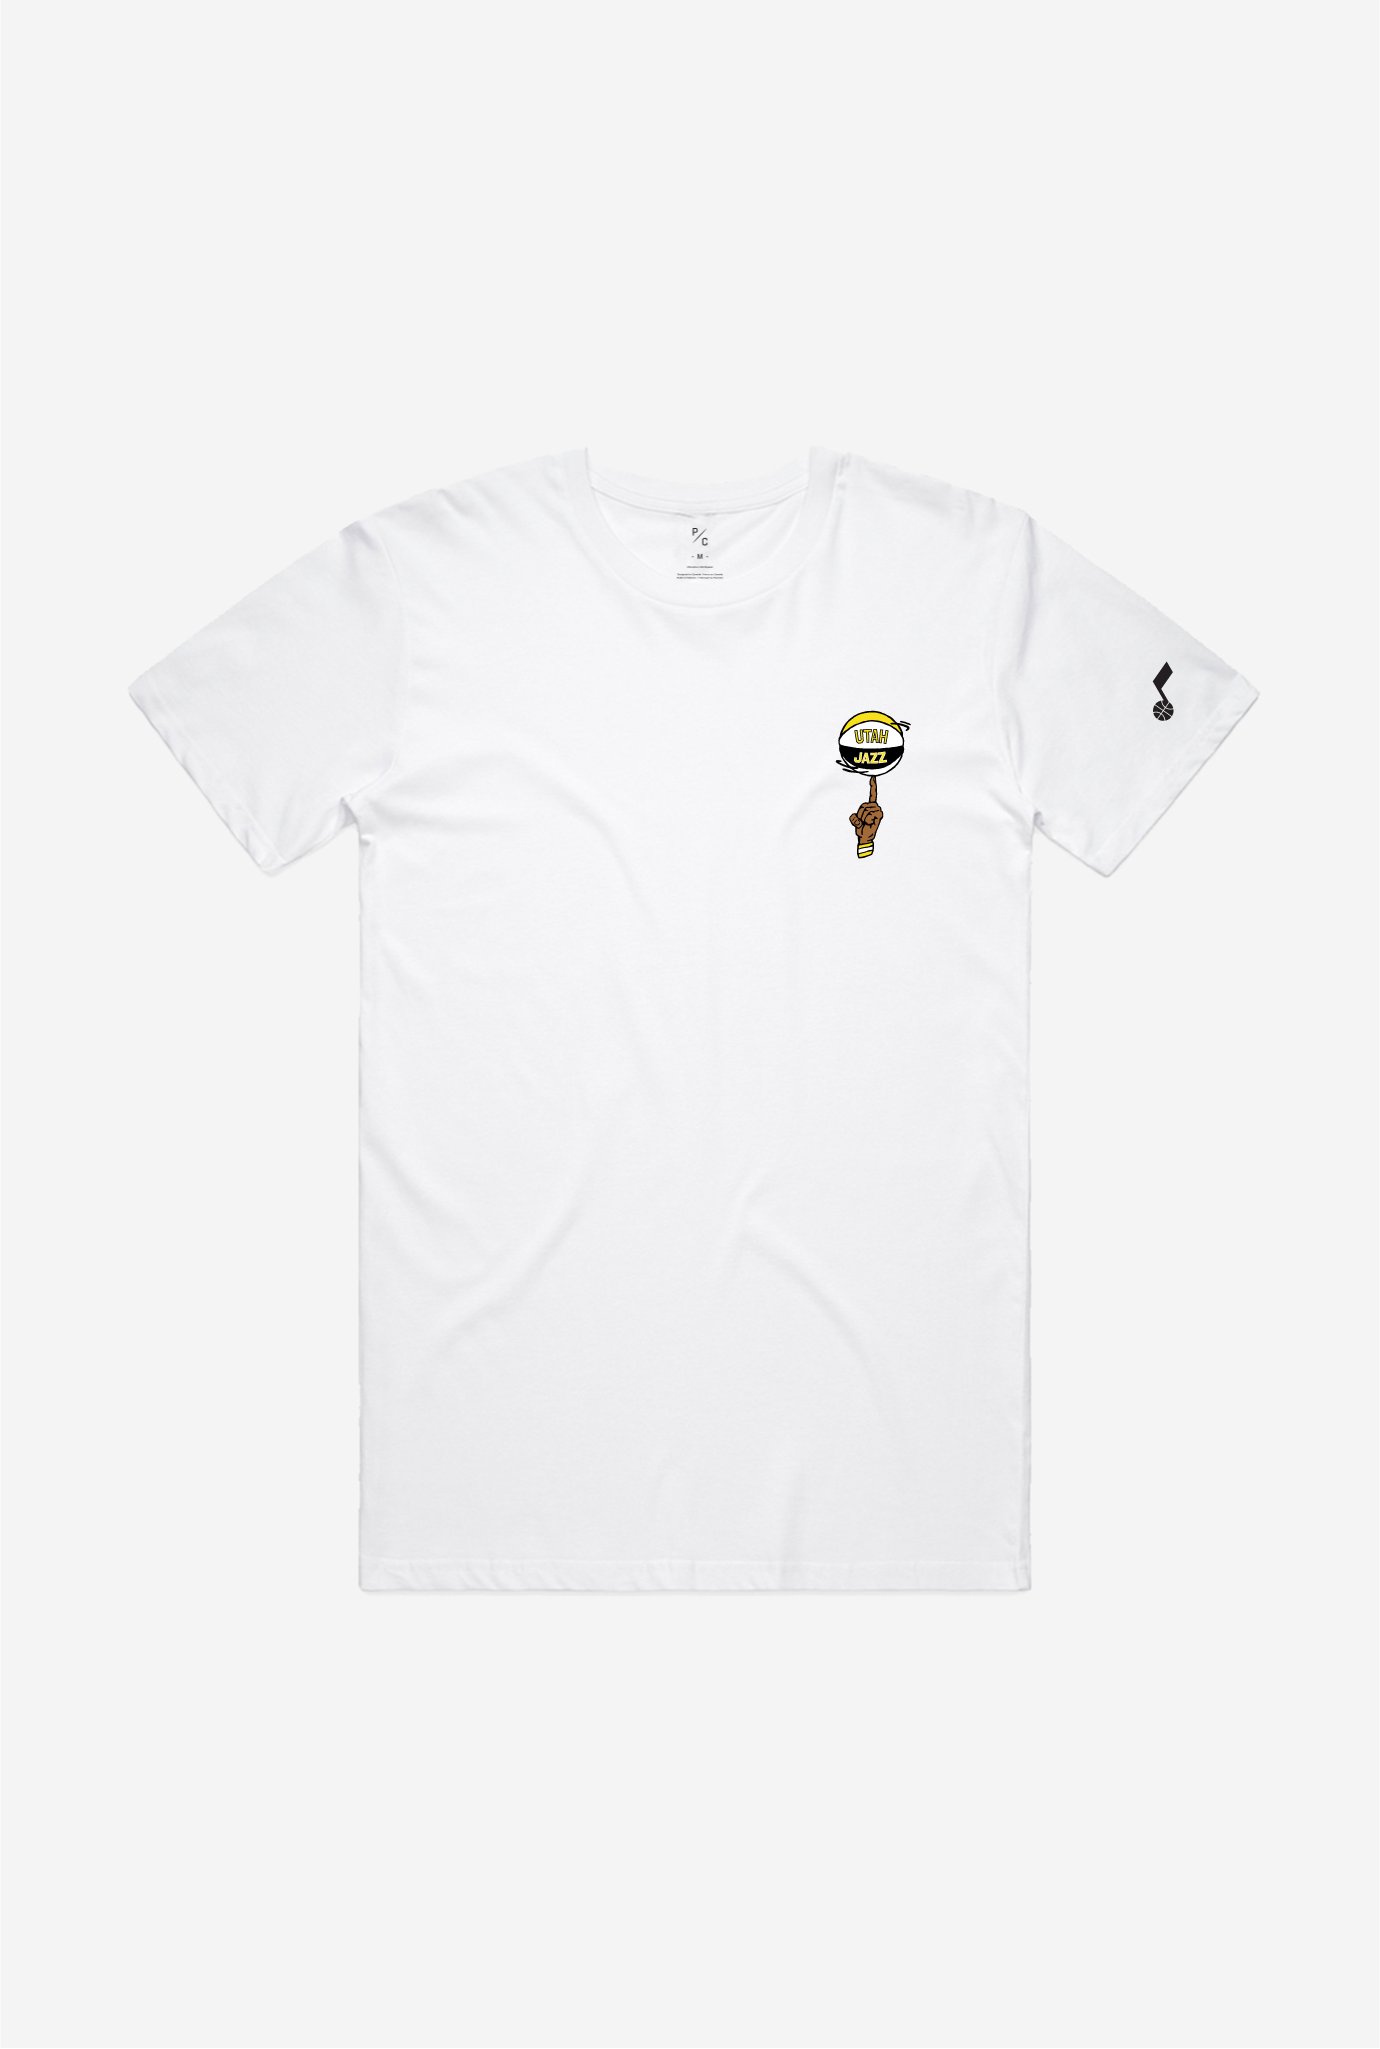 Utah Jazz Spinning Ball T-Shirt - White